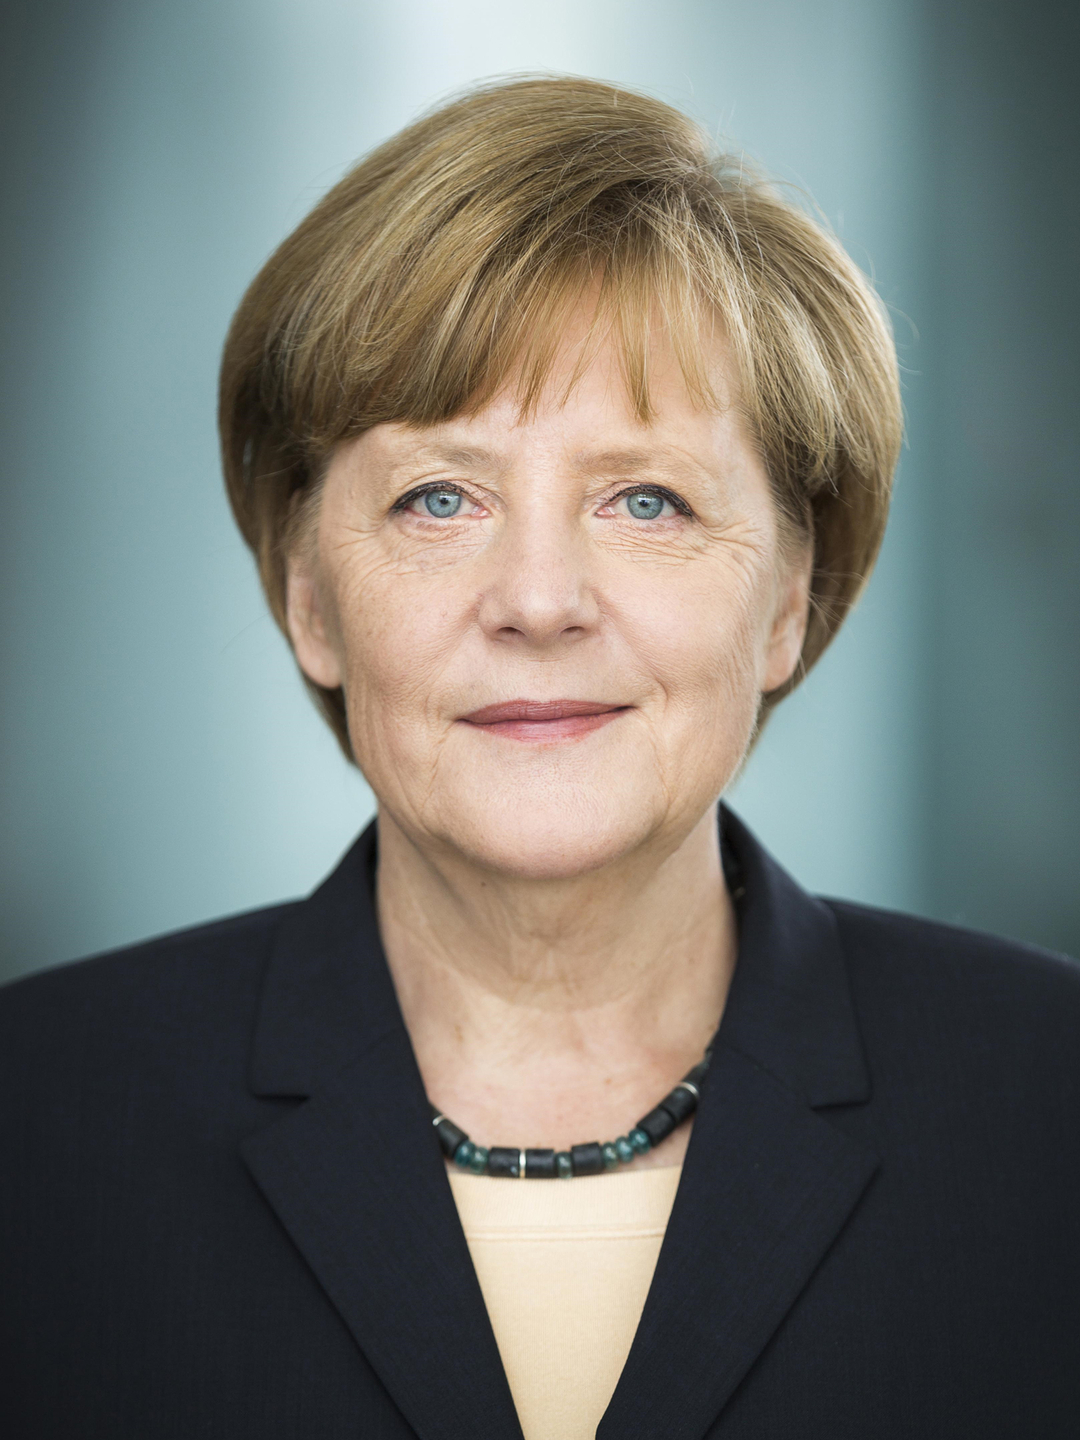 Angela Merkel who are her parents